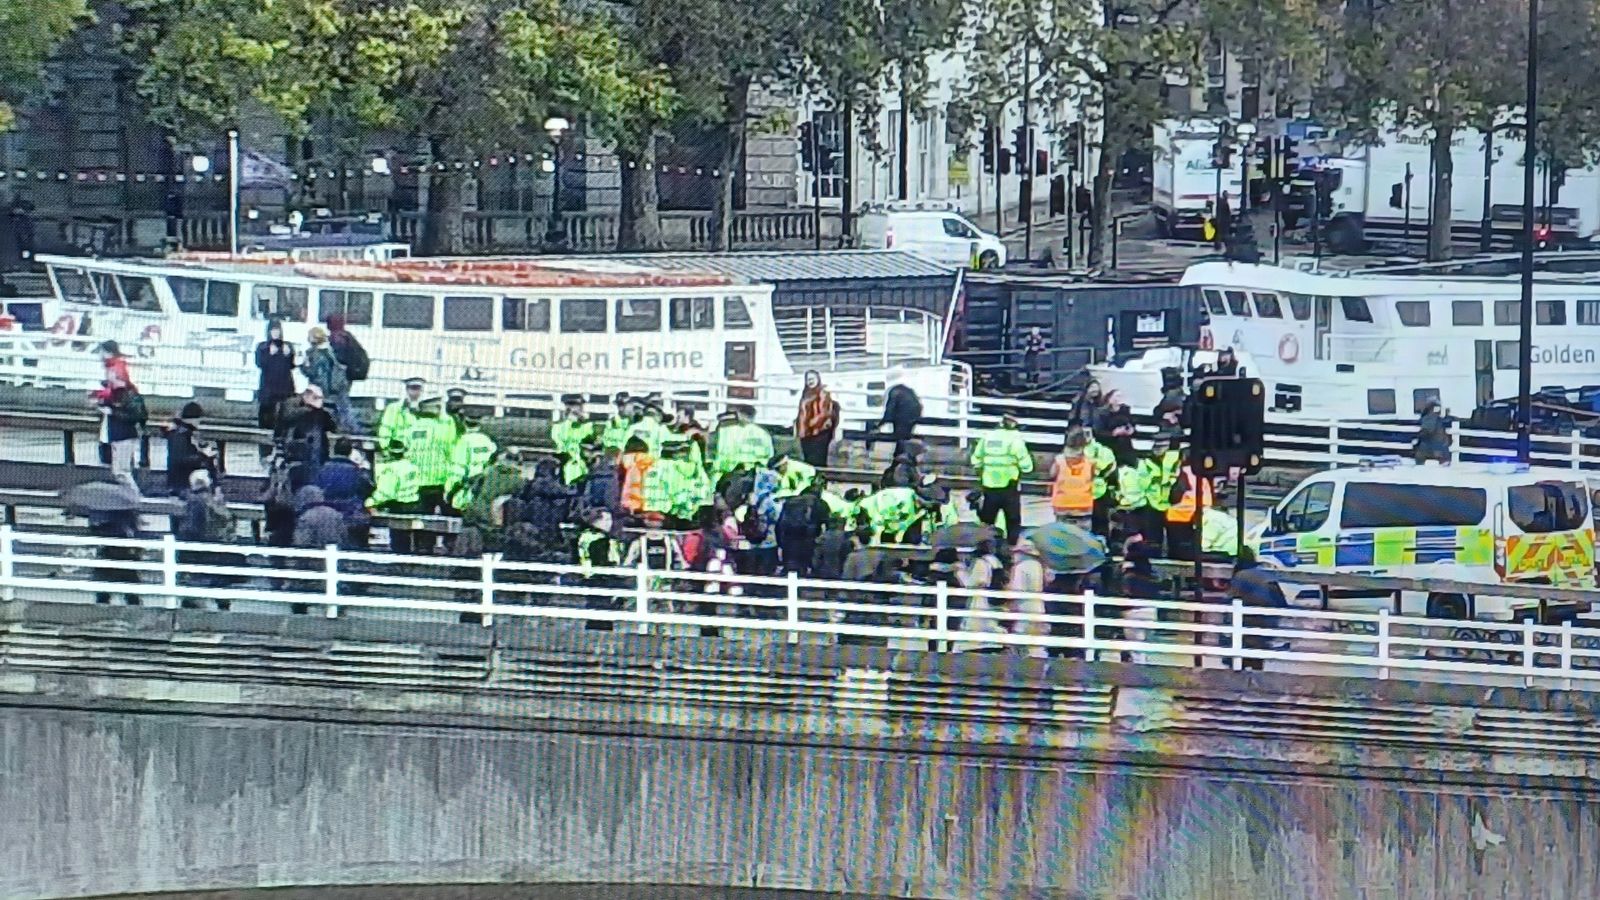 Just Stop Oil activists 'block ambulance on blue lights' on Waterloo Bridge - as police make arrests